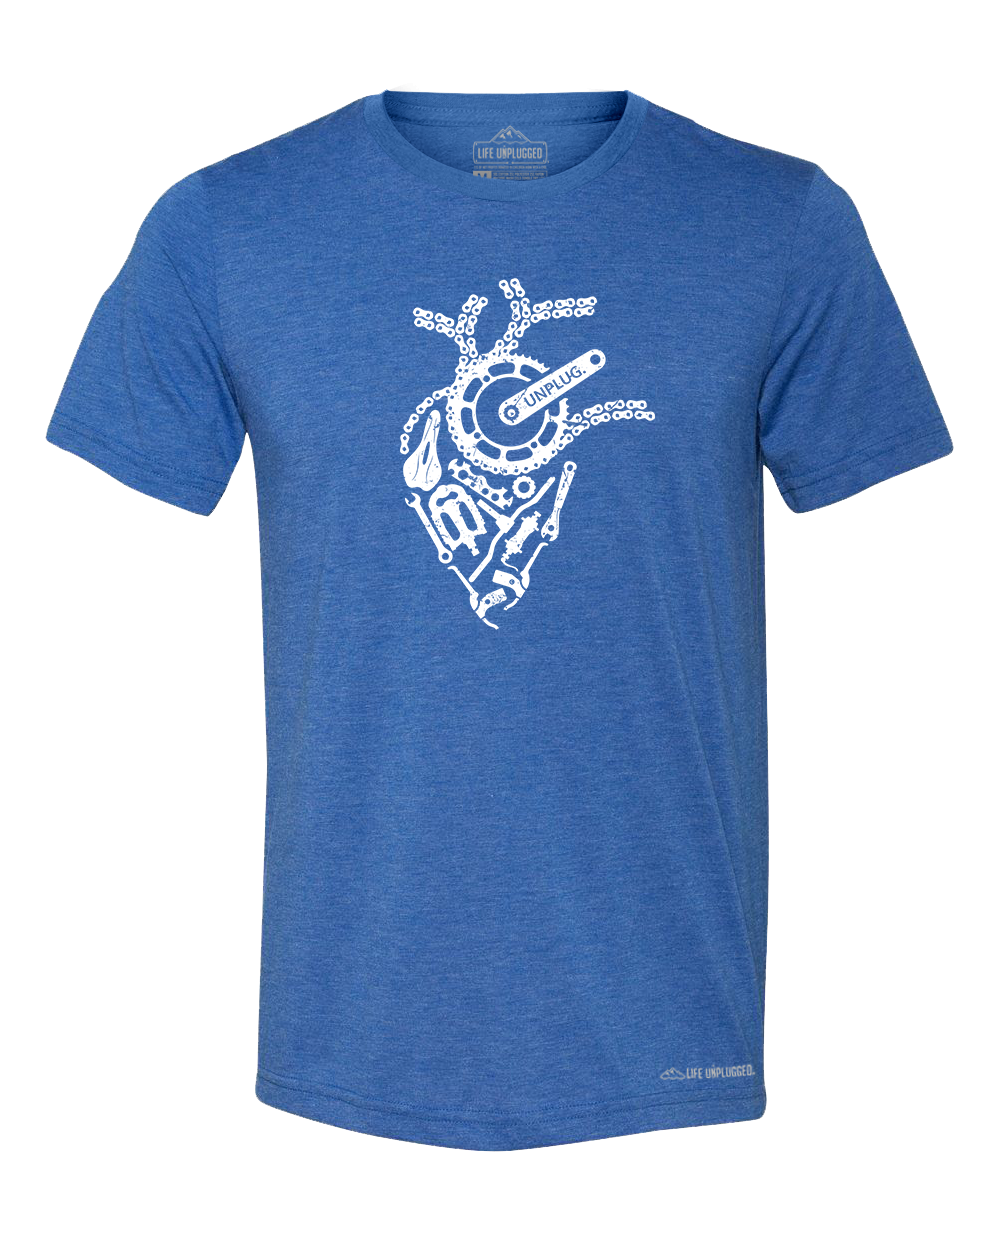 Anatomical Heart (Bicycle Parts) Premium Triblend T-Shirt